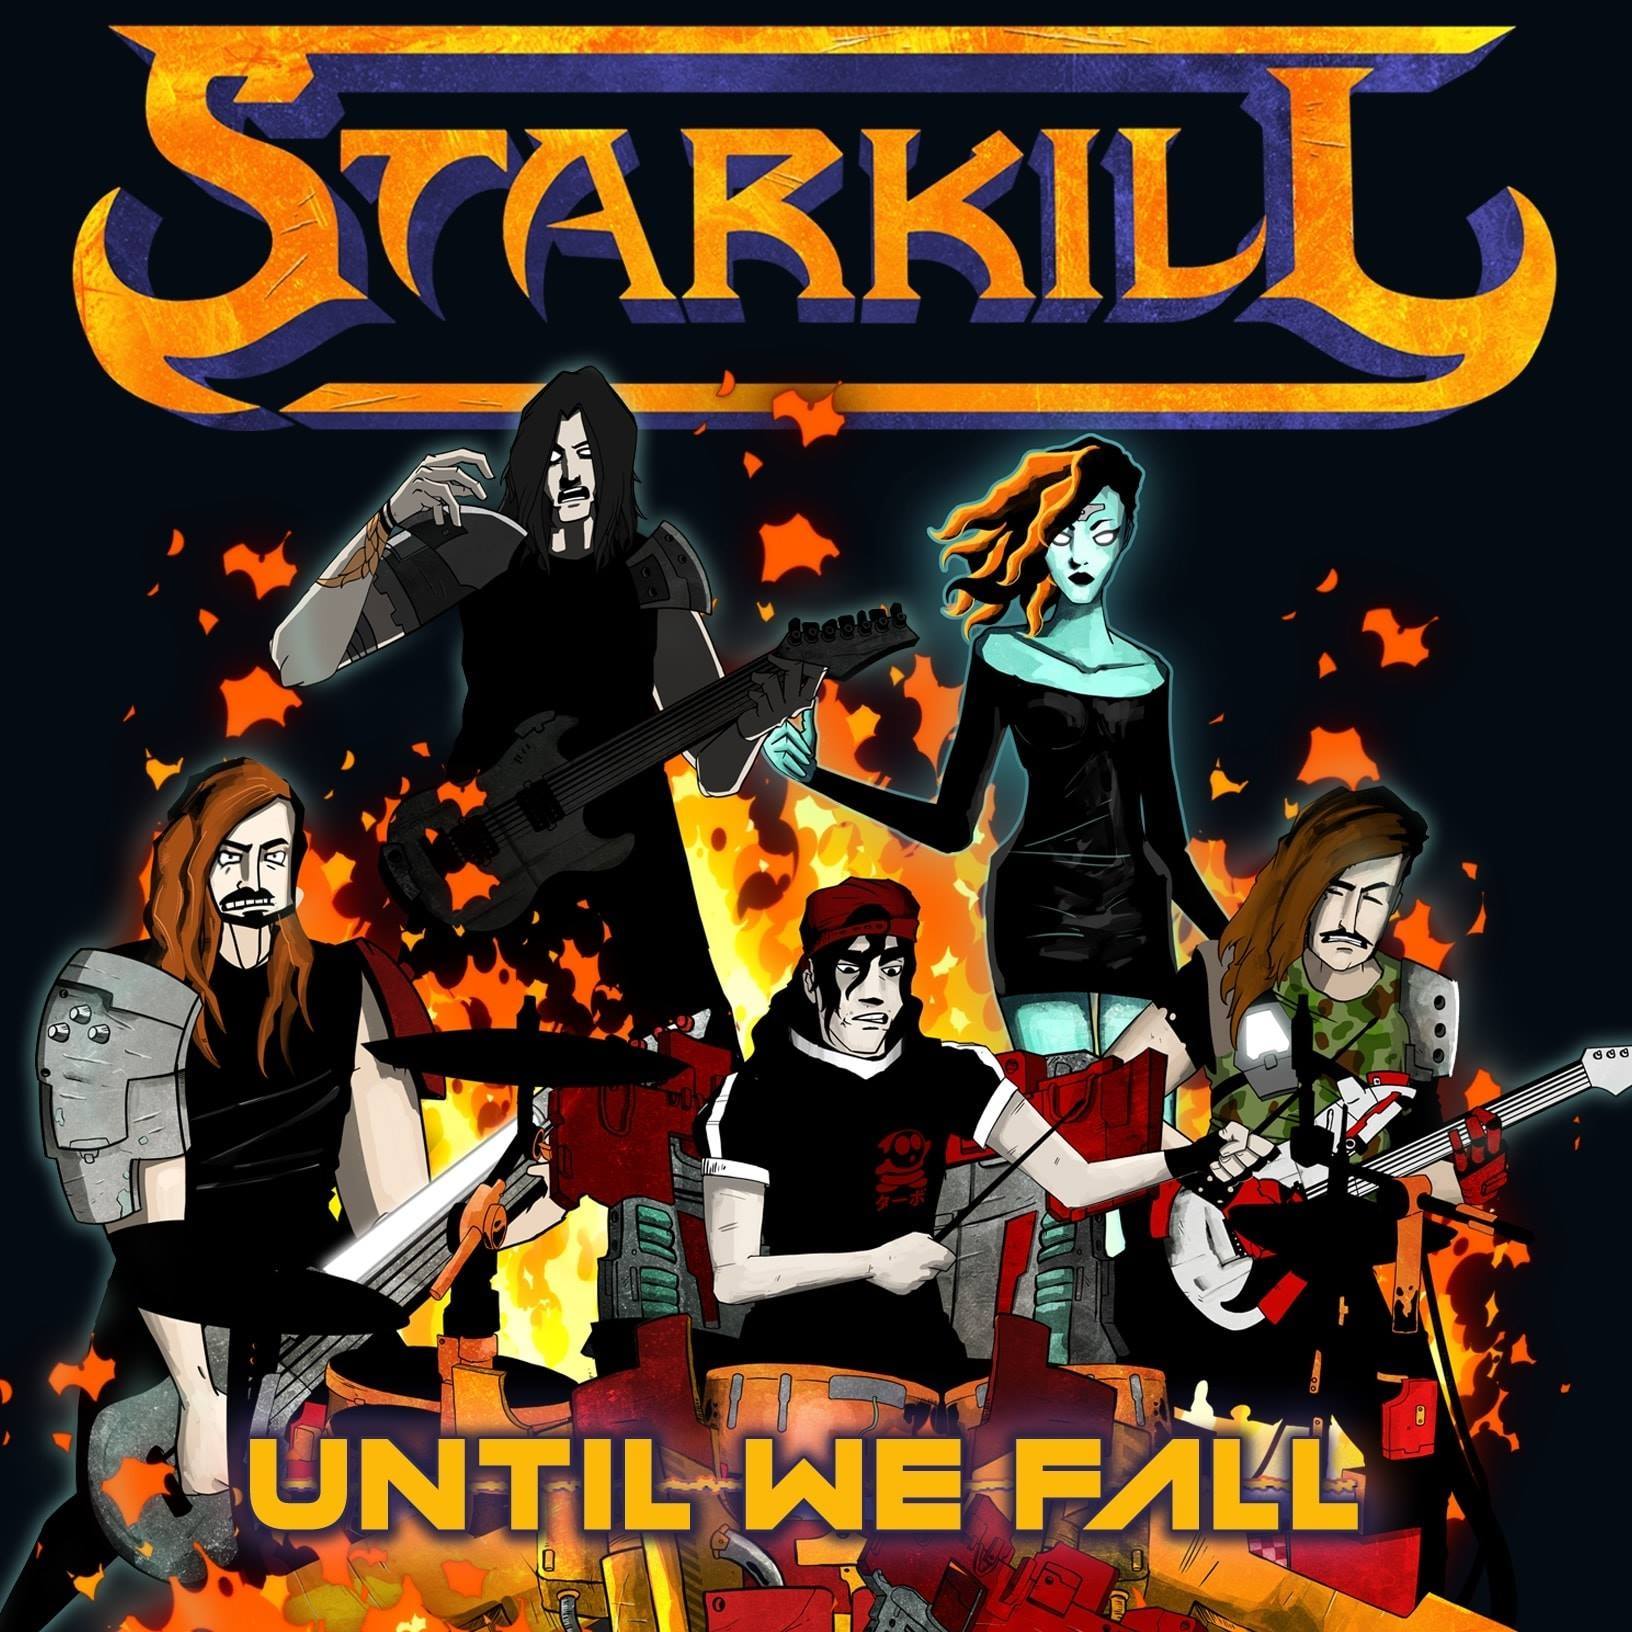 Starkill premiere Dethklok-esque Music Video “Until We Fall”